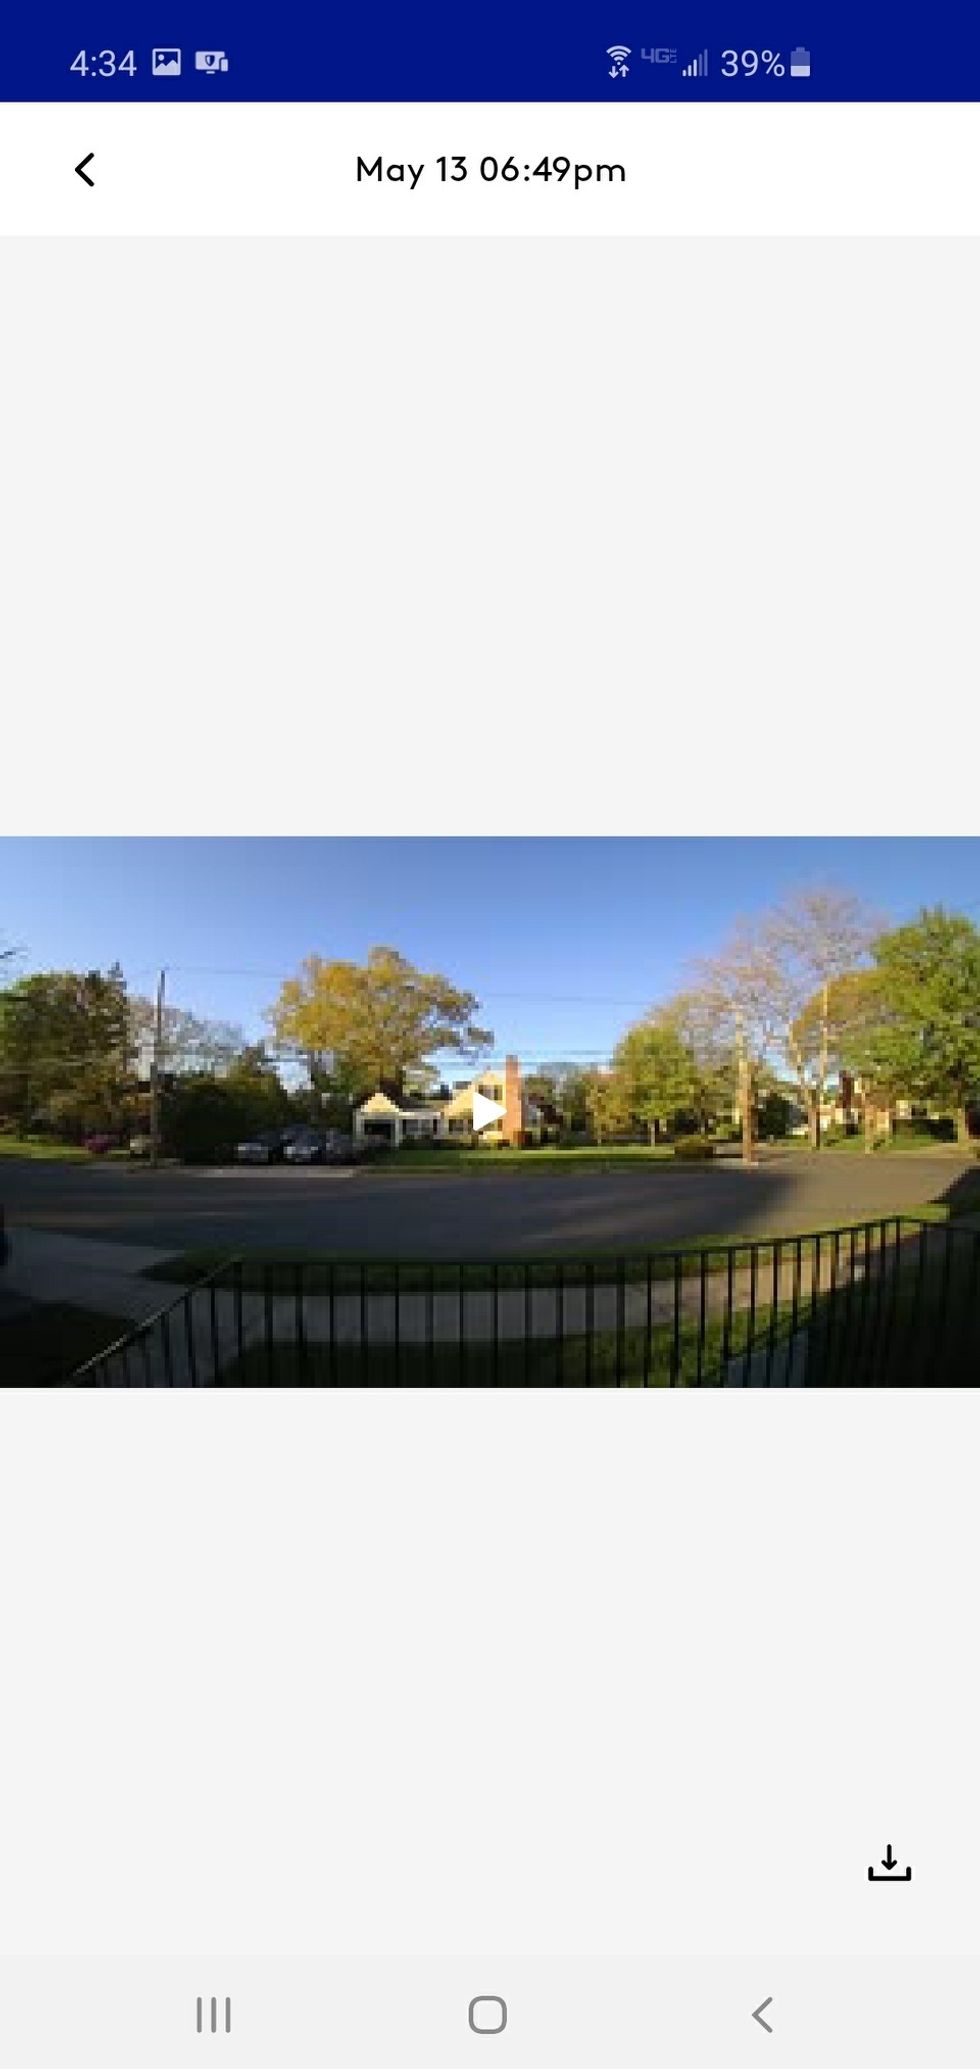 daytime video seen in app from Blue Doorbell Camera